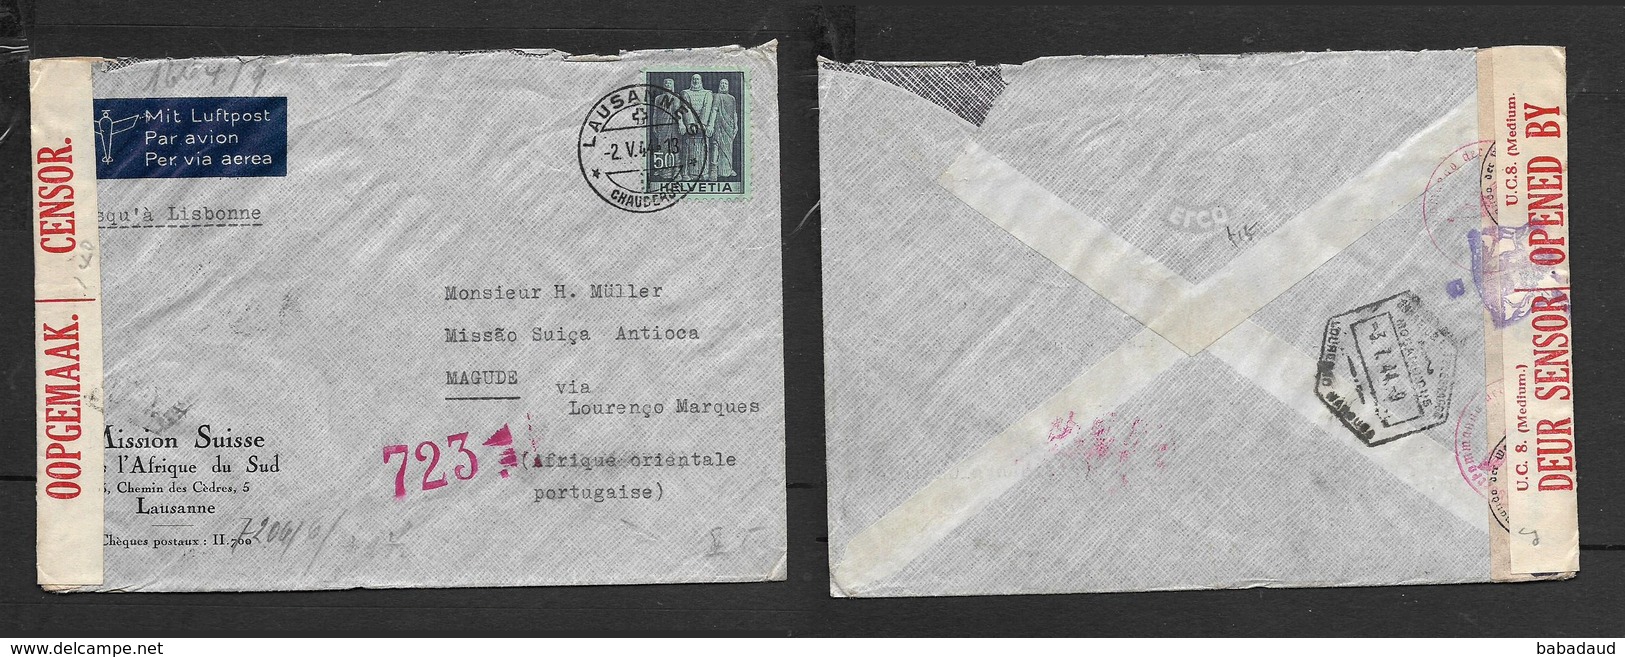 1944, 50c Air Mail, LAUSANNE 9 CHAUDERON 2.5.44>.Magude,LAURENCO MARQUES 3.7.44 Transit, German & Union Censor - Covers & Documents